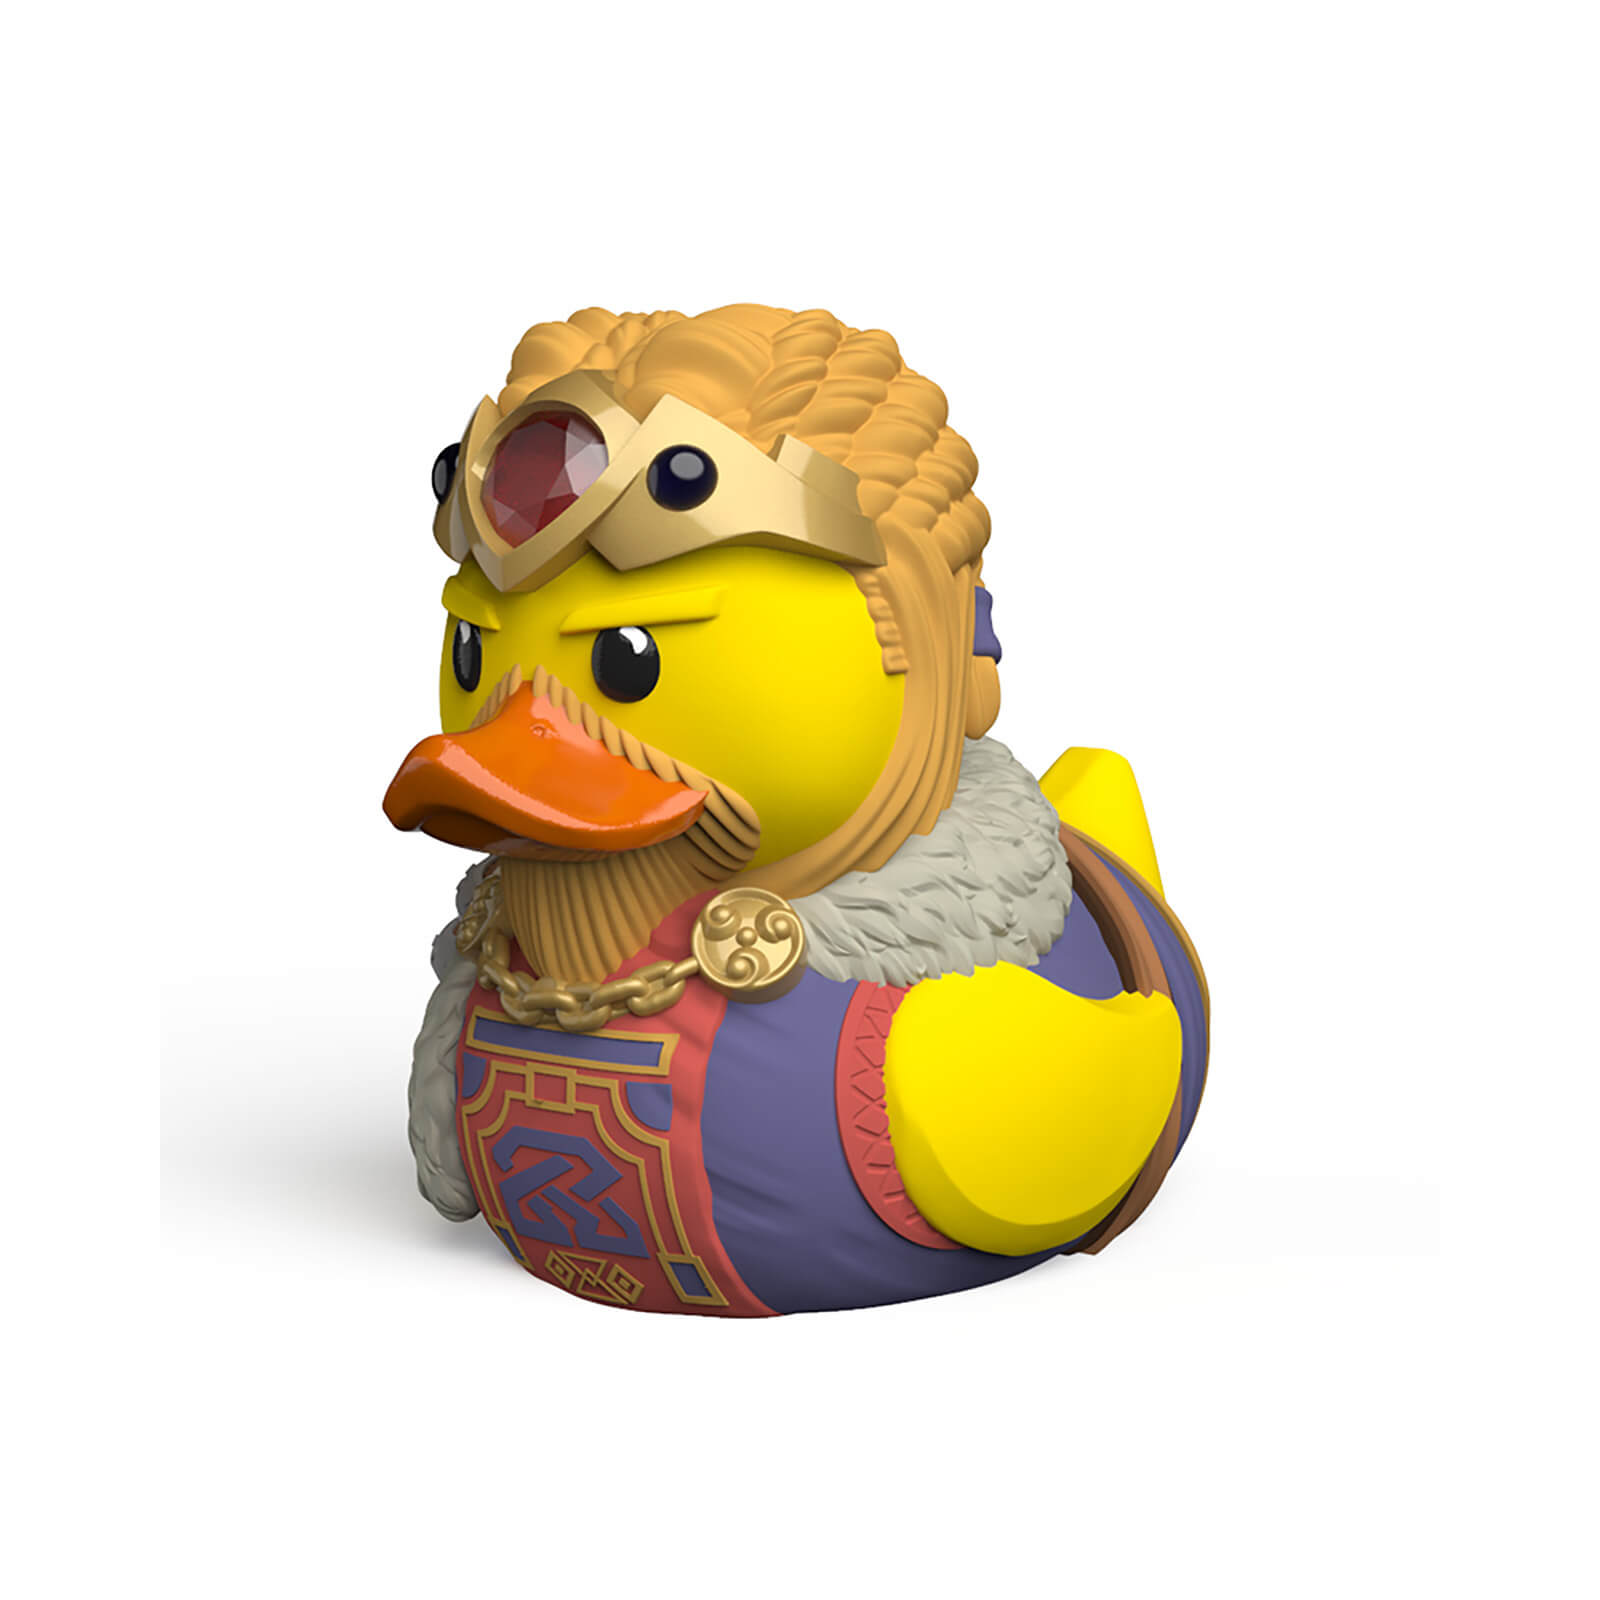 Skyrim Tubbz Collectable Duck - Jarl Balgruuf the Greater